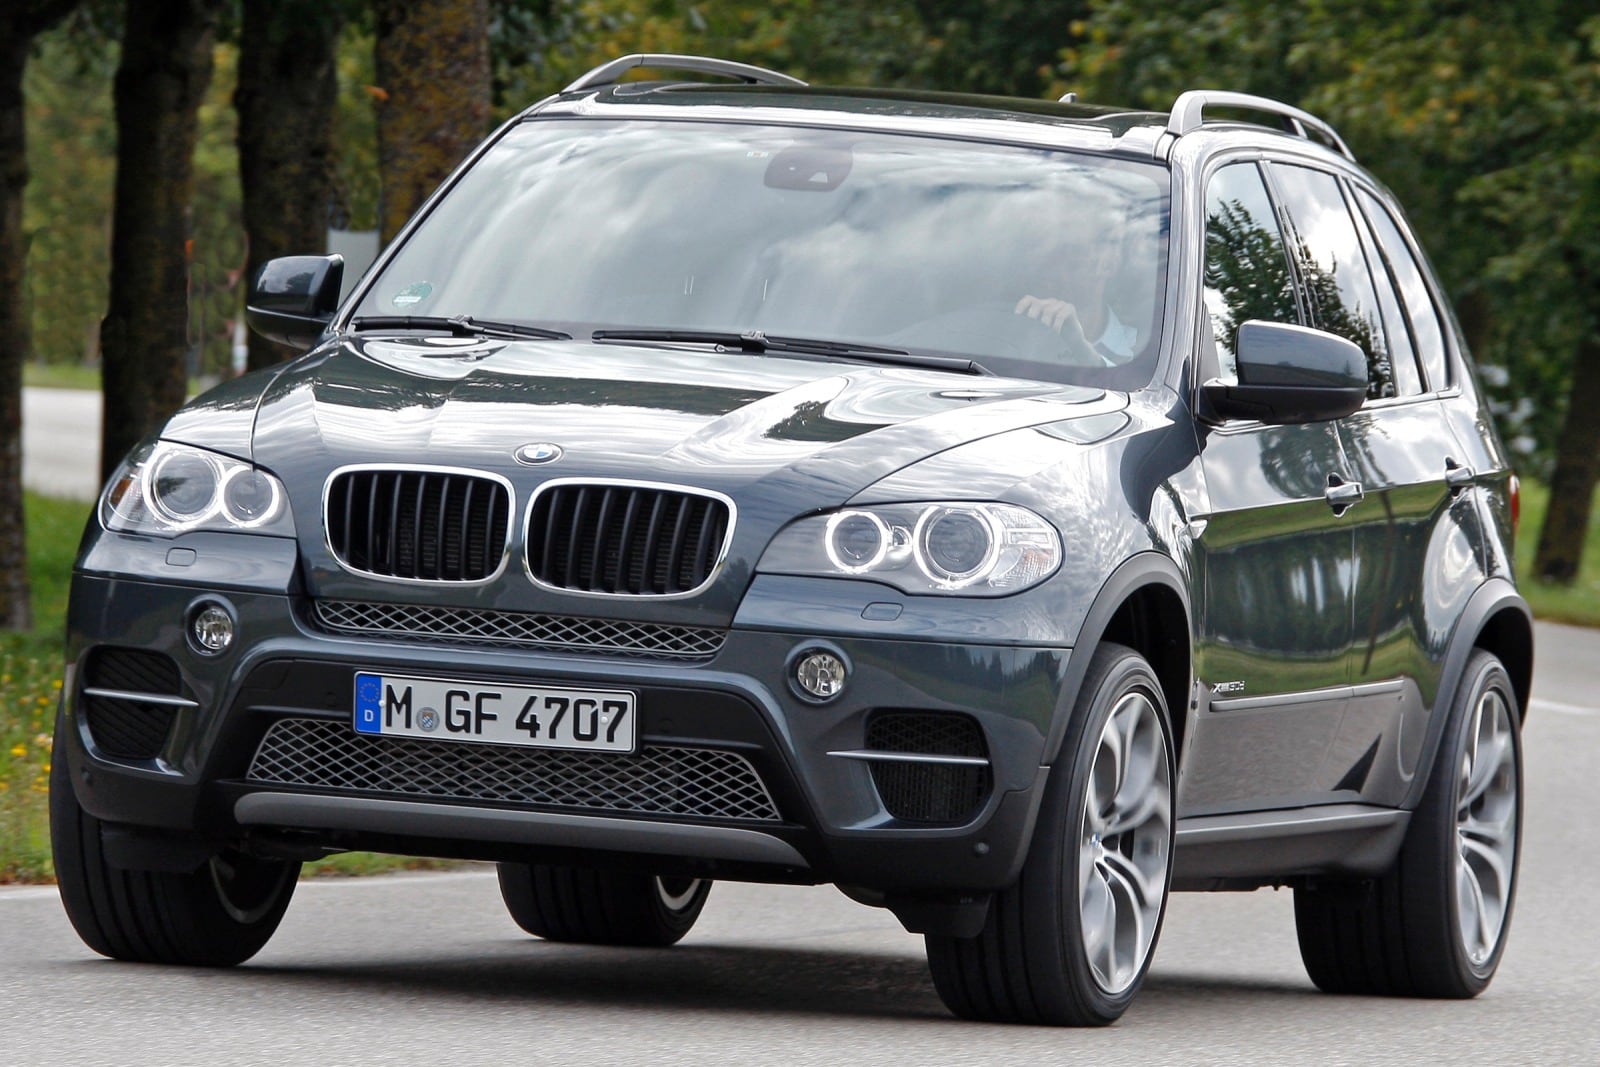 2013 BMW X5 Review & Ratings | Edmunds